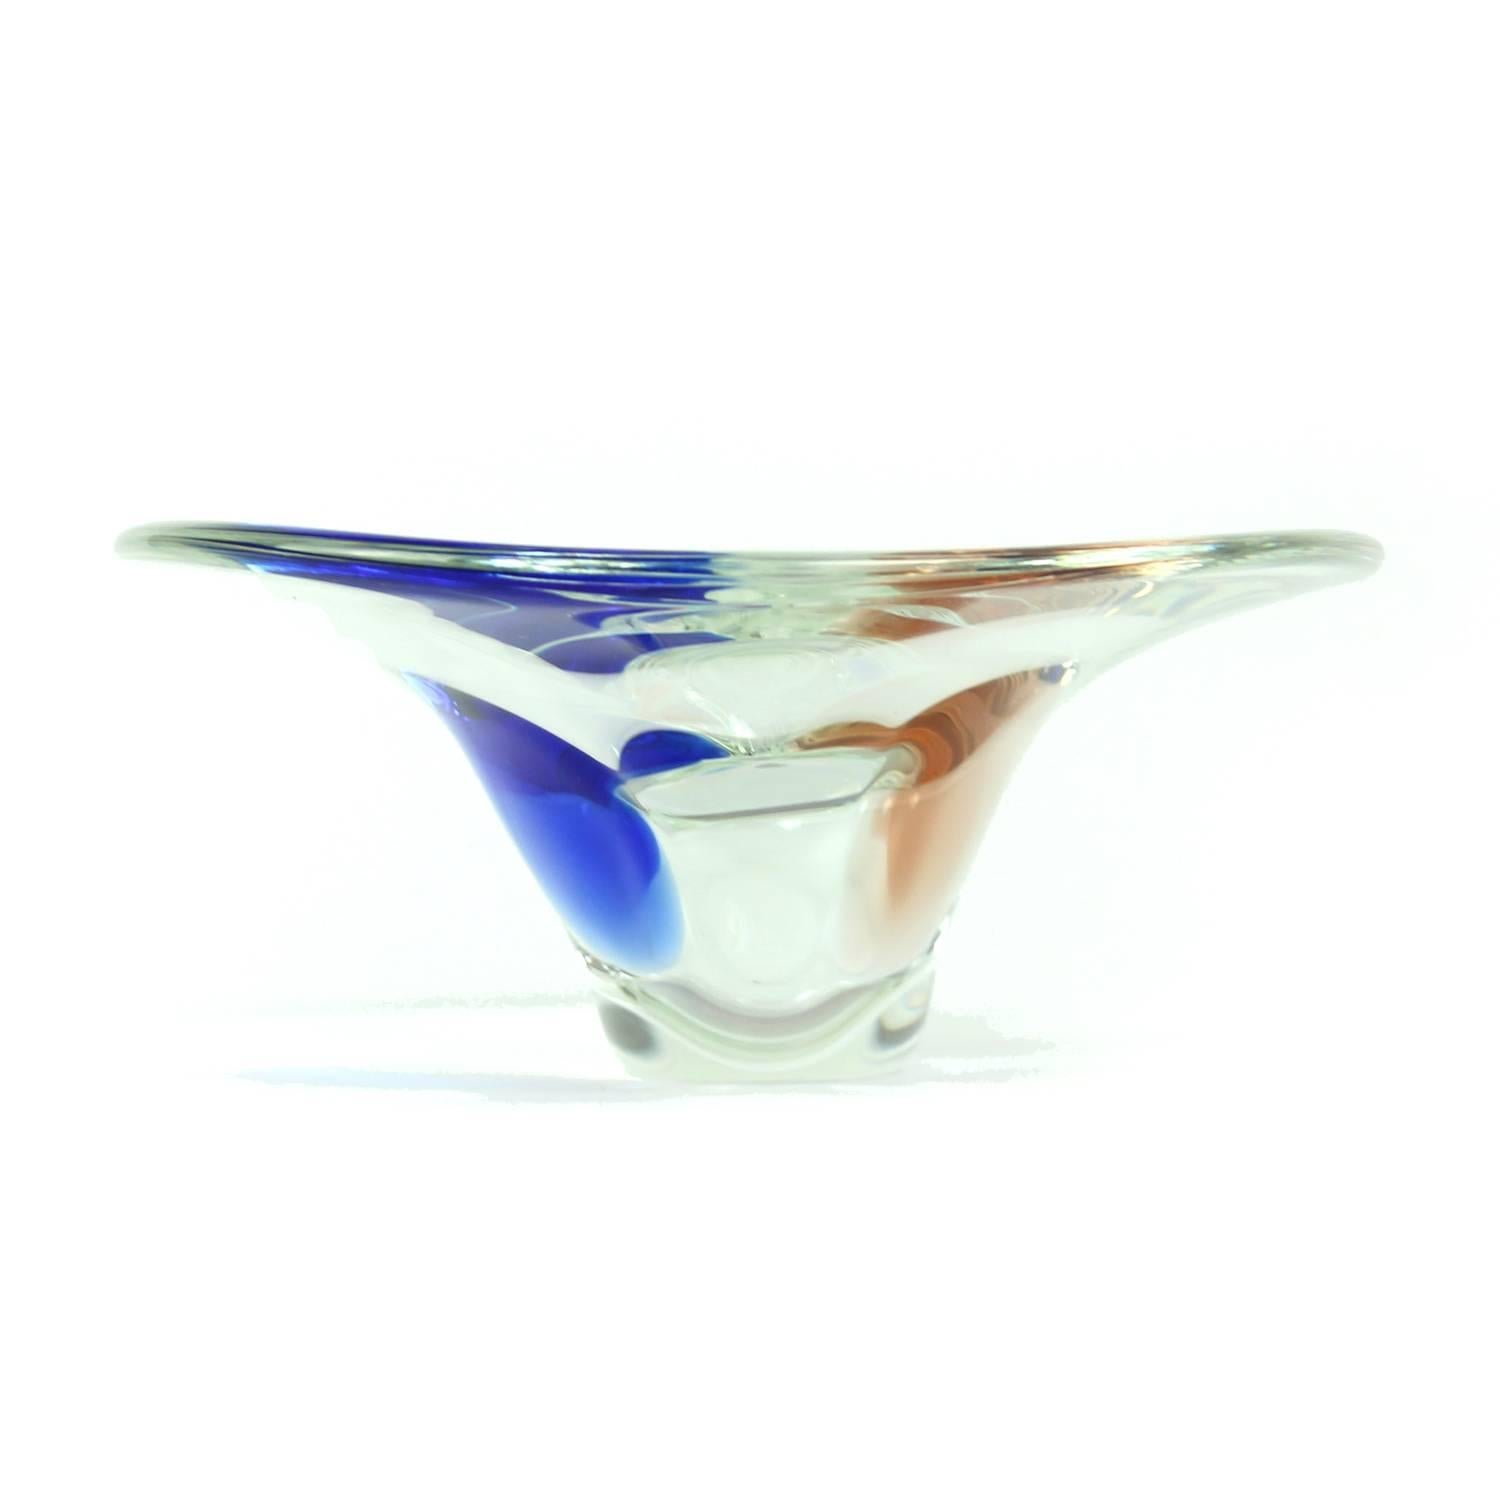 Bohemian Clear and Blue Art Glass Bowl by Borocrystal, Czechoslovakia, circa 1960